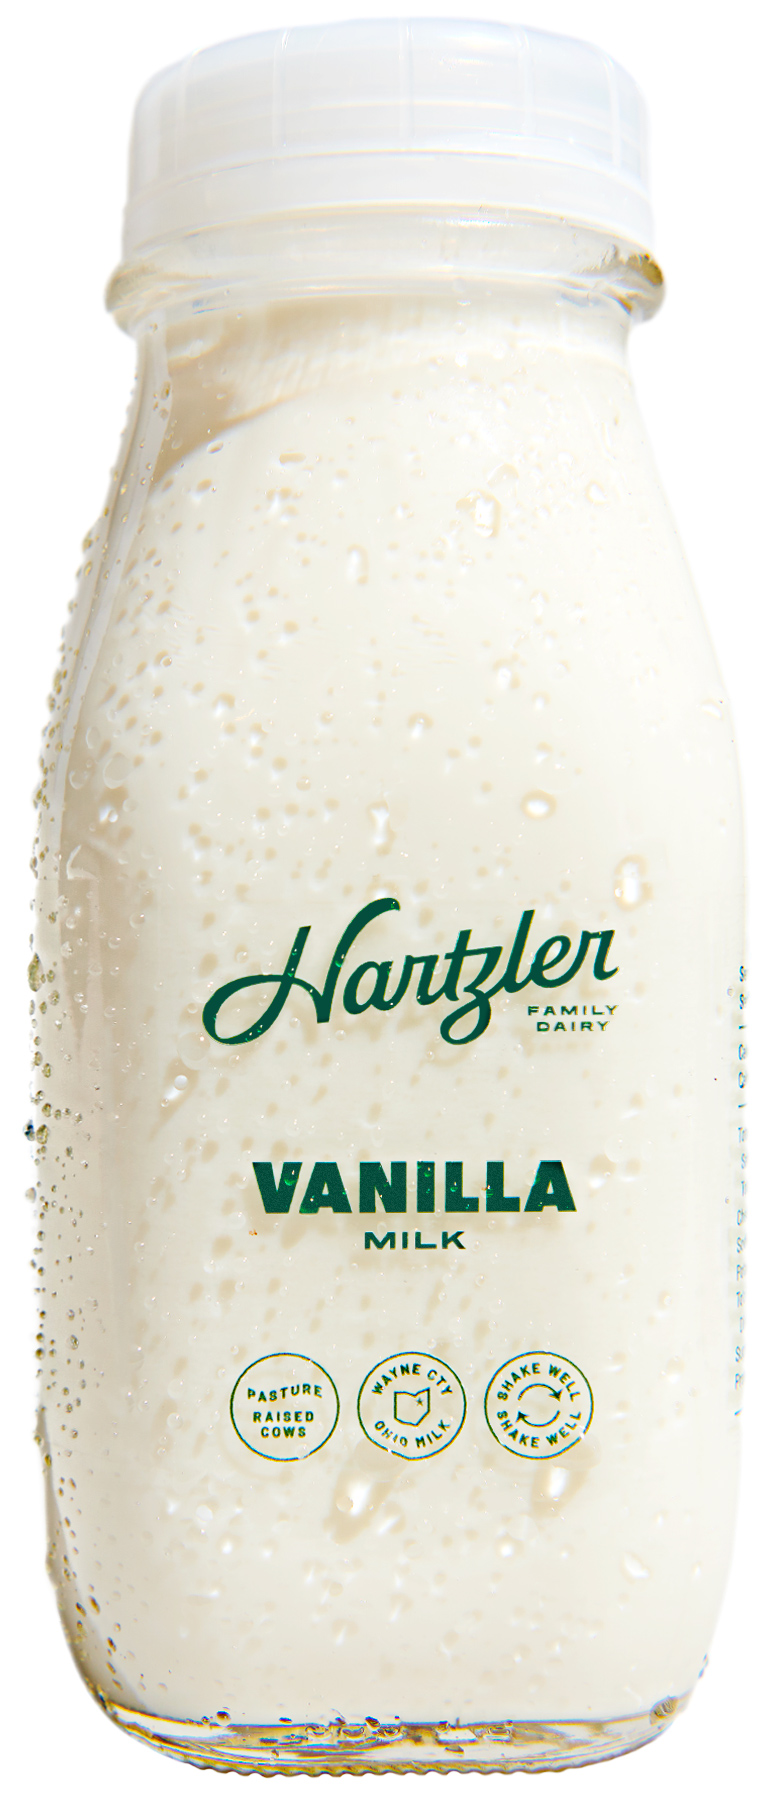 CC-Hartzler-Vanilla